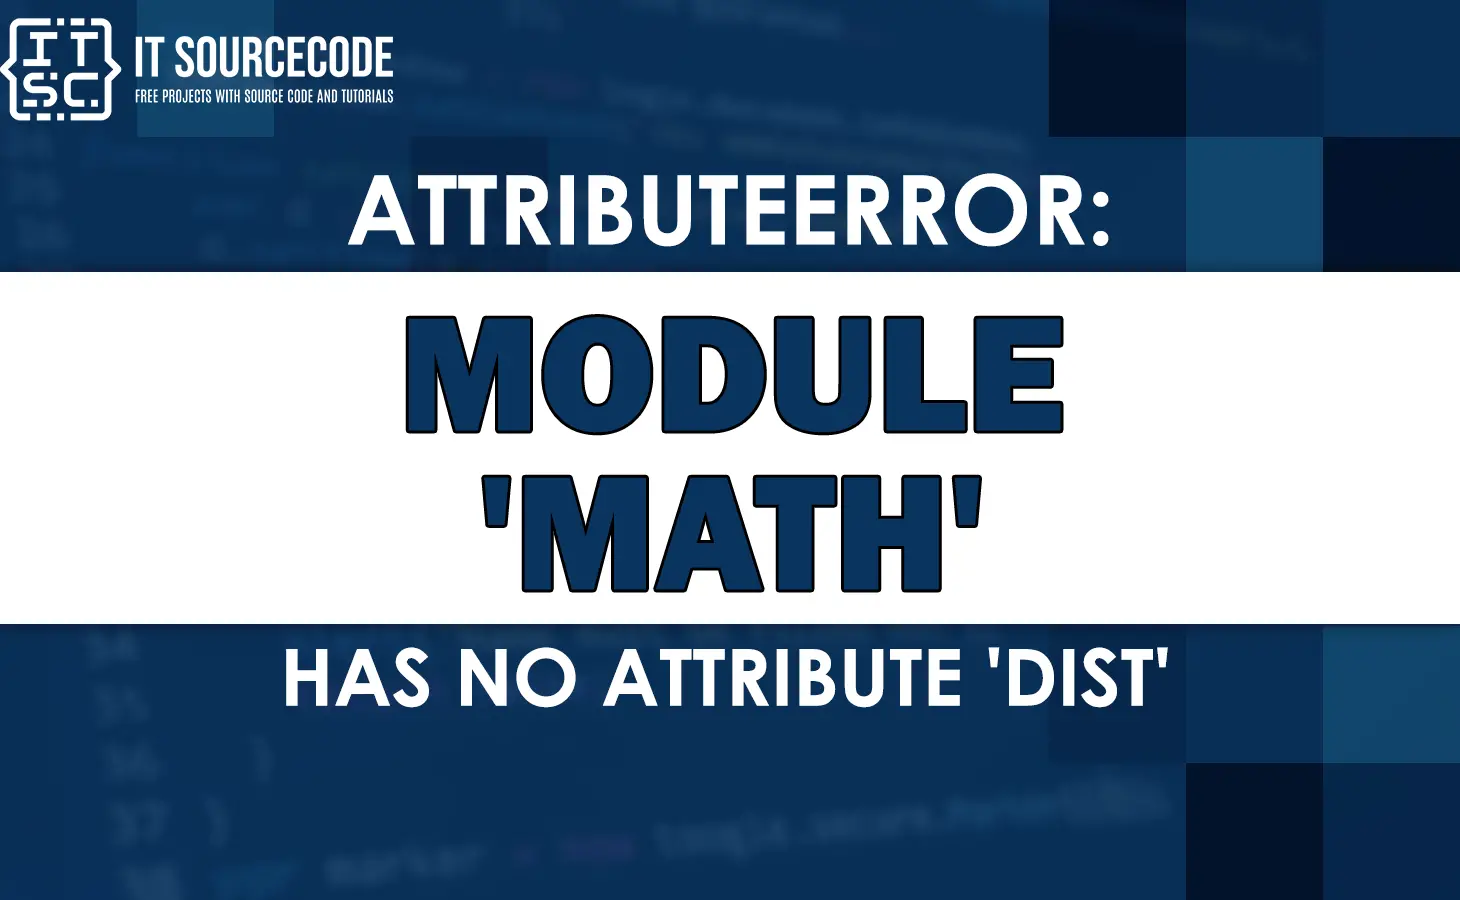 Attributeerror: module 'math' has no attribute 'dist'